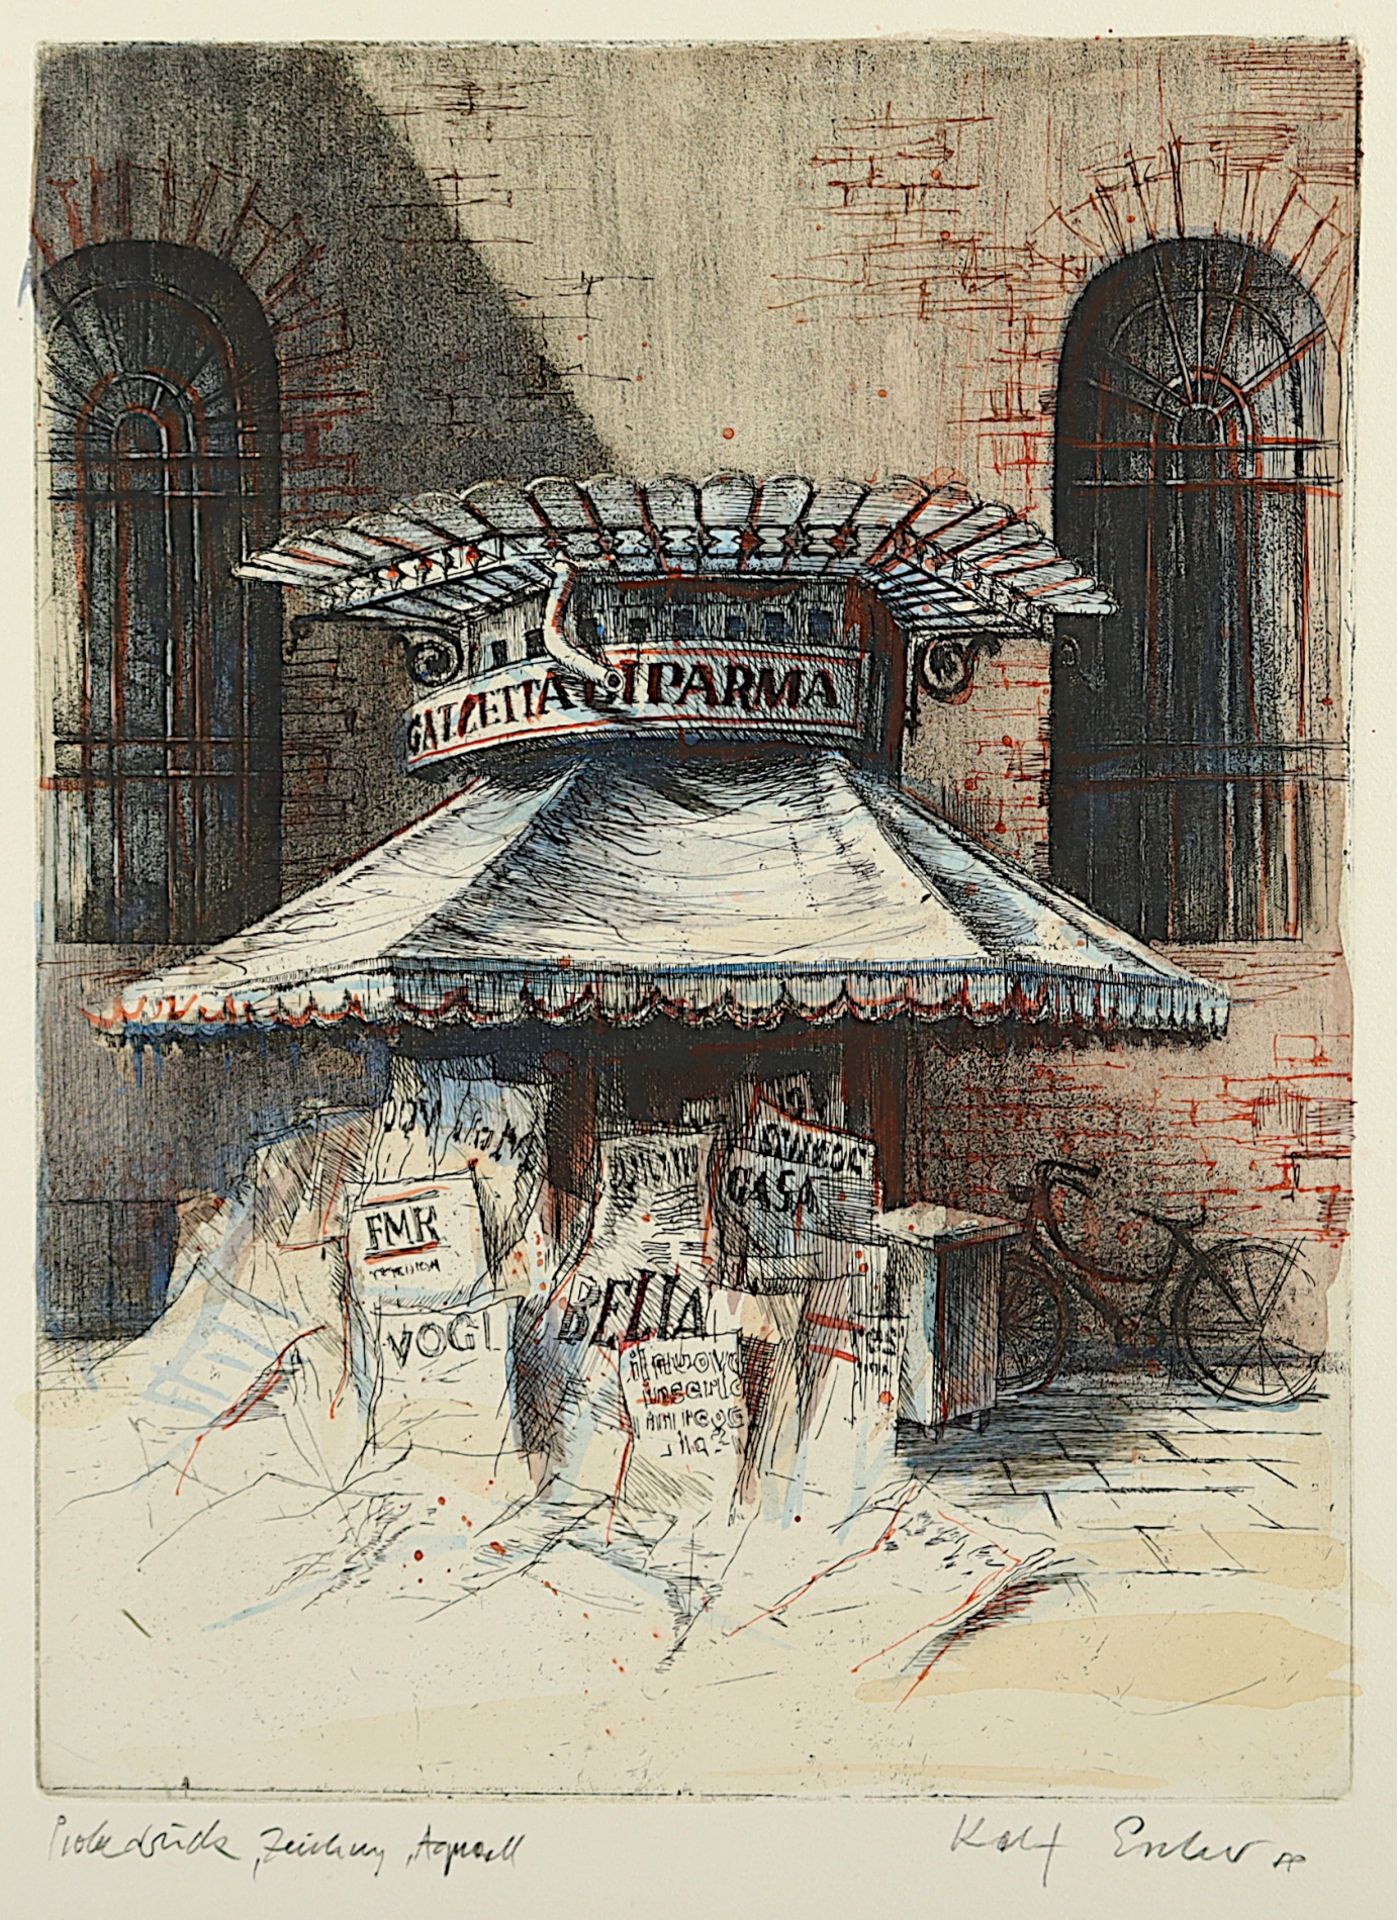 ESCHER, Rolf, "Venedig alter Kiosk", Original-Radierung, koloriert, 32 x 23, bez. Probedruck, Zeich